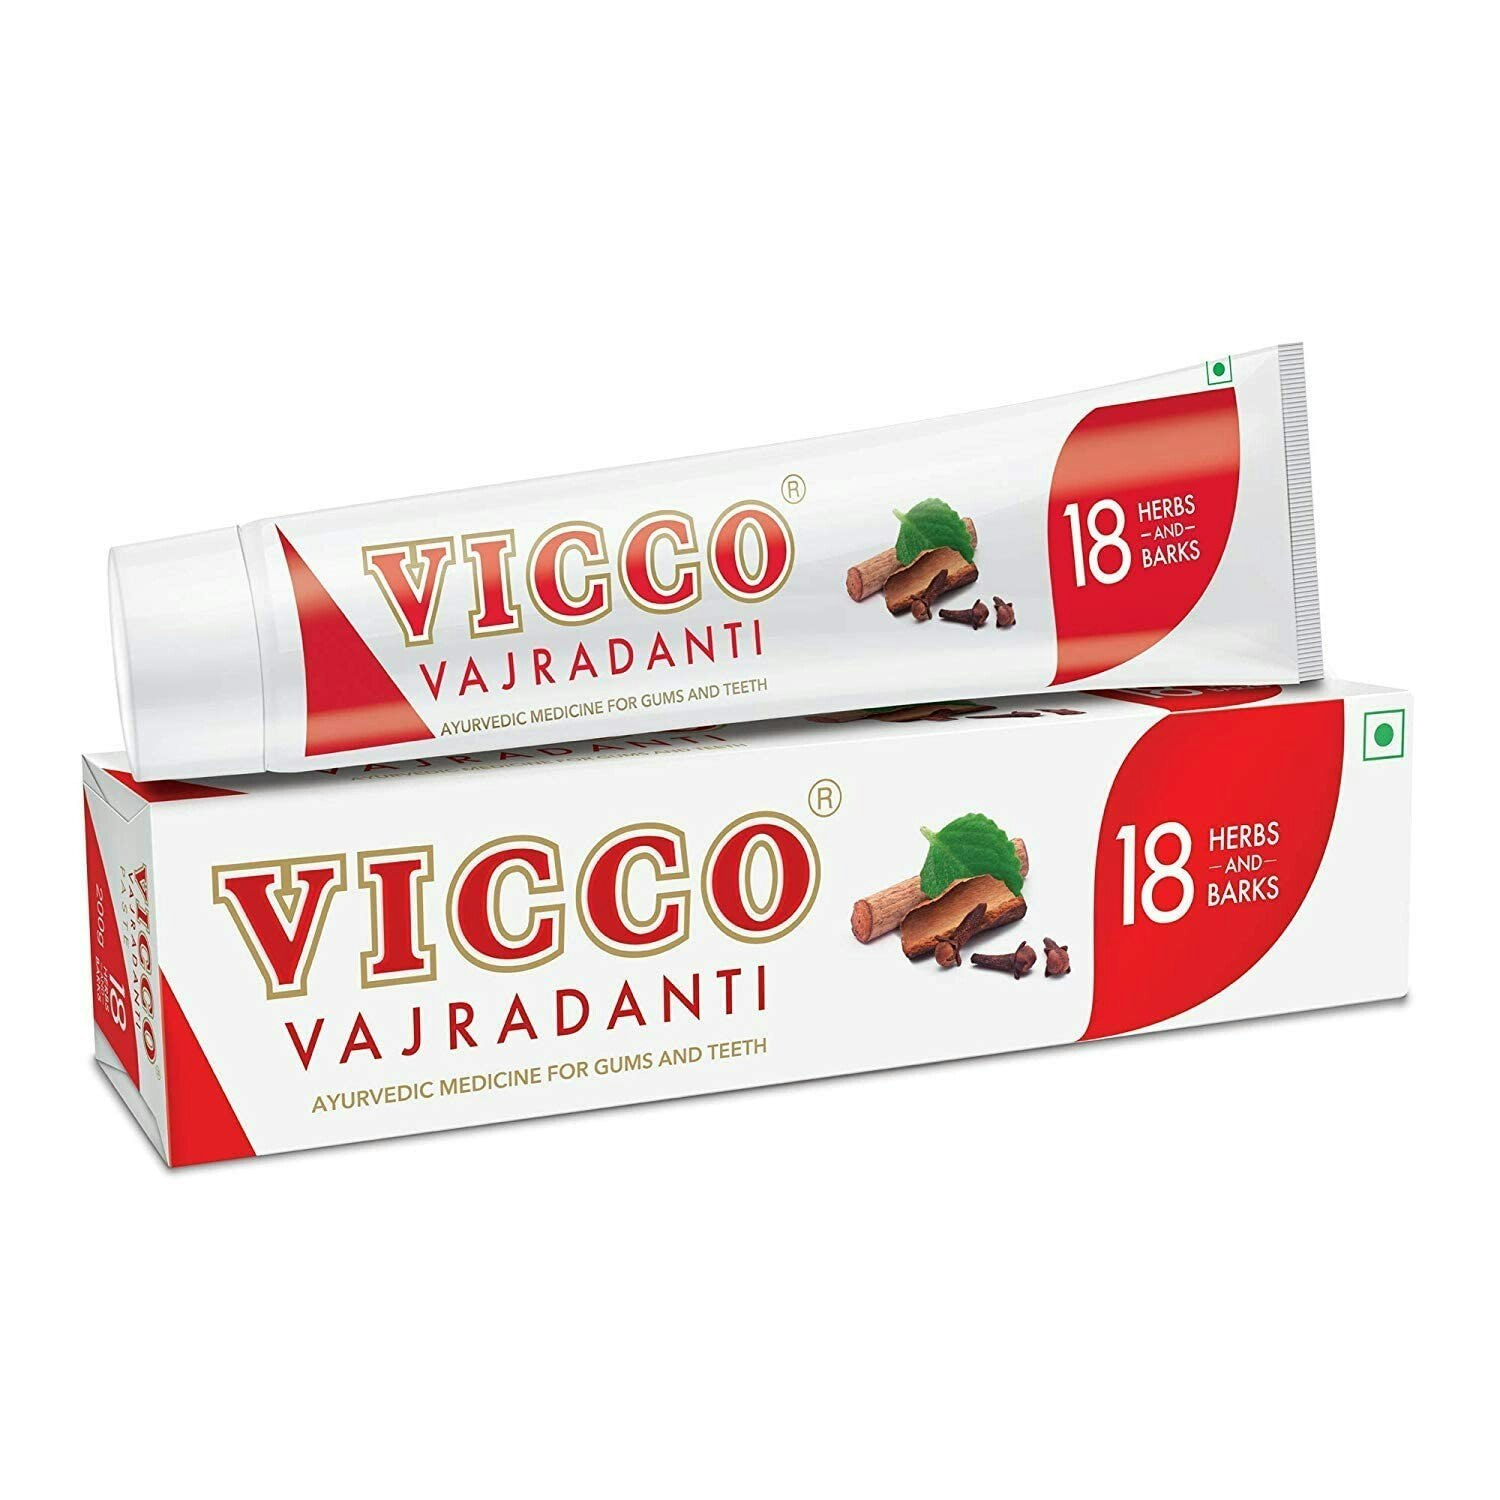 Vicco Vajradanti Tooth Paste 200g